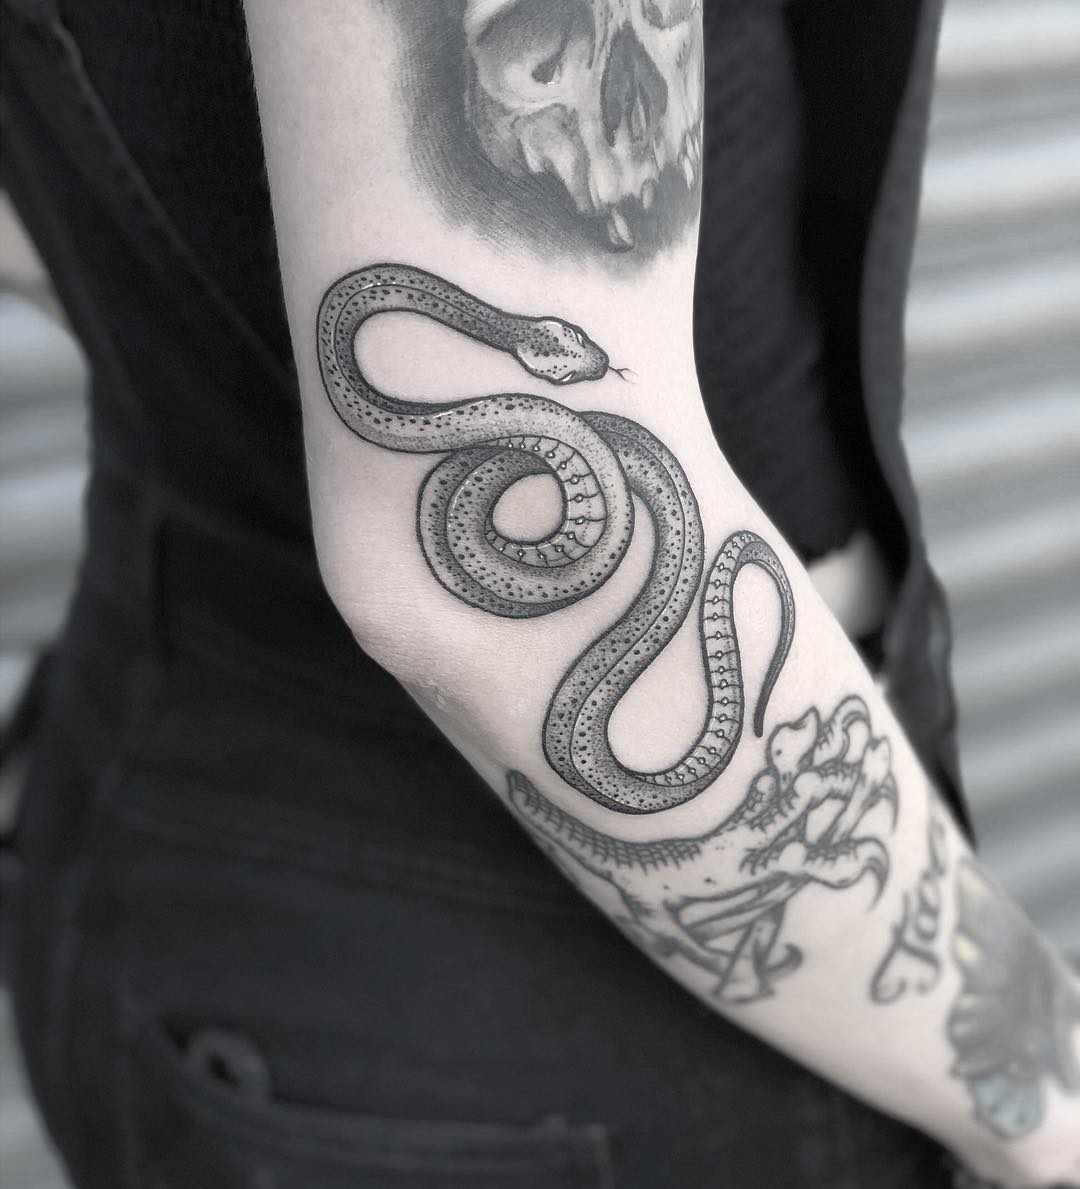 Snake filler by Lozzy Bones